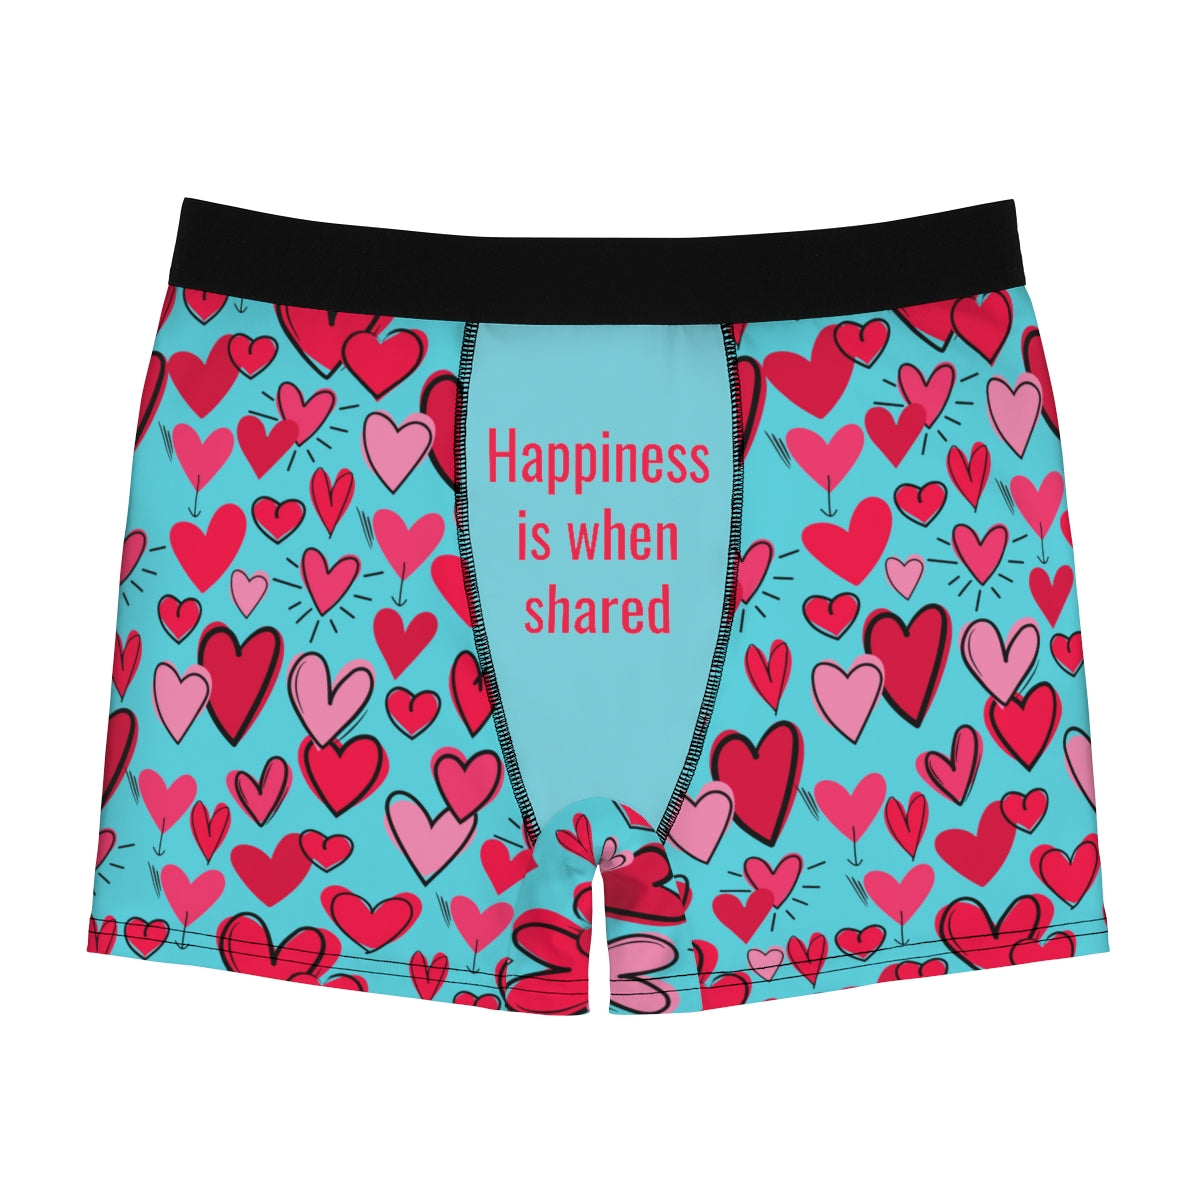 HAXMNOU Heart Printed Valentine's Day Women's Boxer Brief Shorts Underwear,  Super Soft, Seamless Comfort for All Day Wear K L 